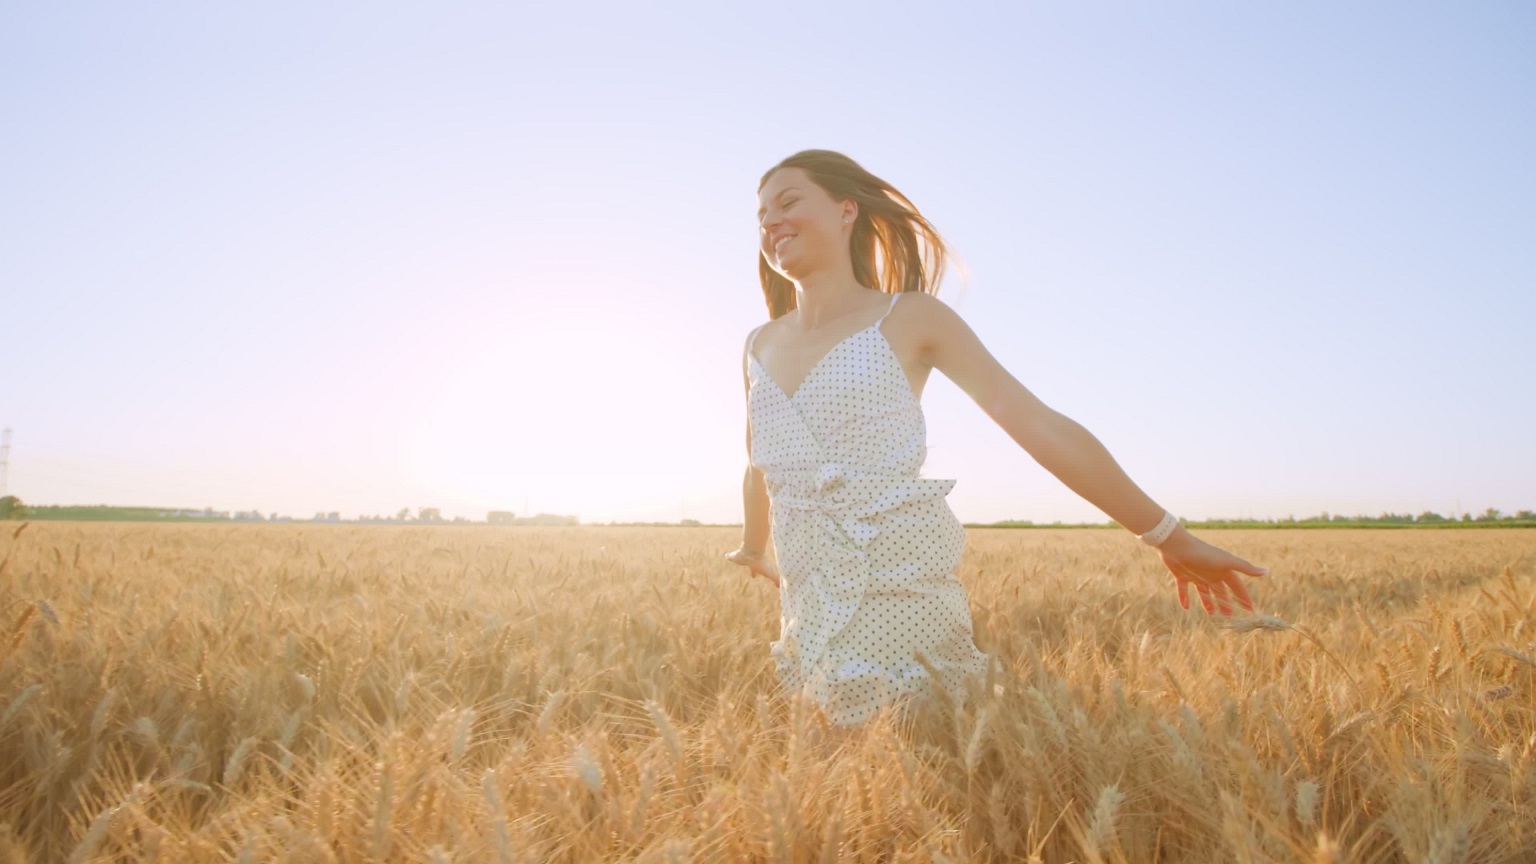 Cheerful woman runs in ripe wheat field under clear blue sky